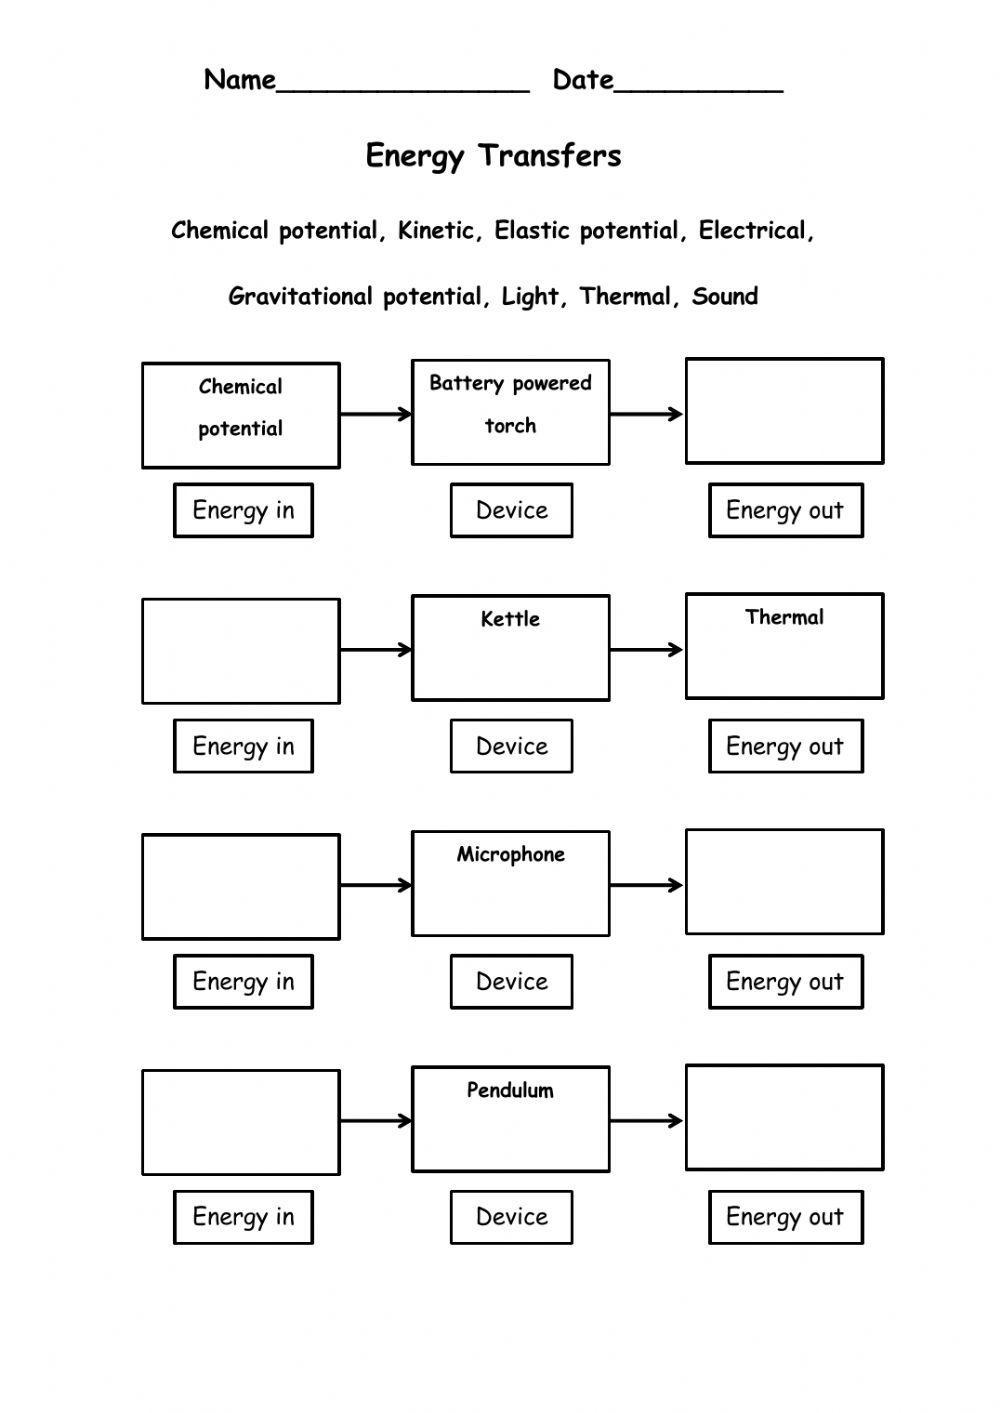 Energy Transformations